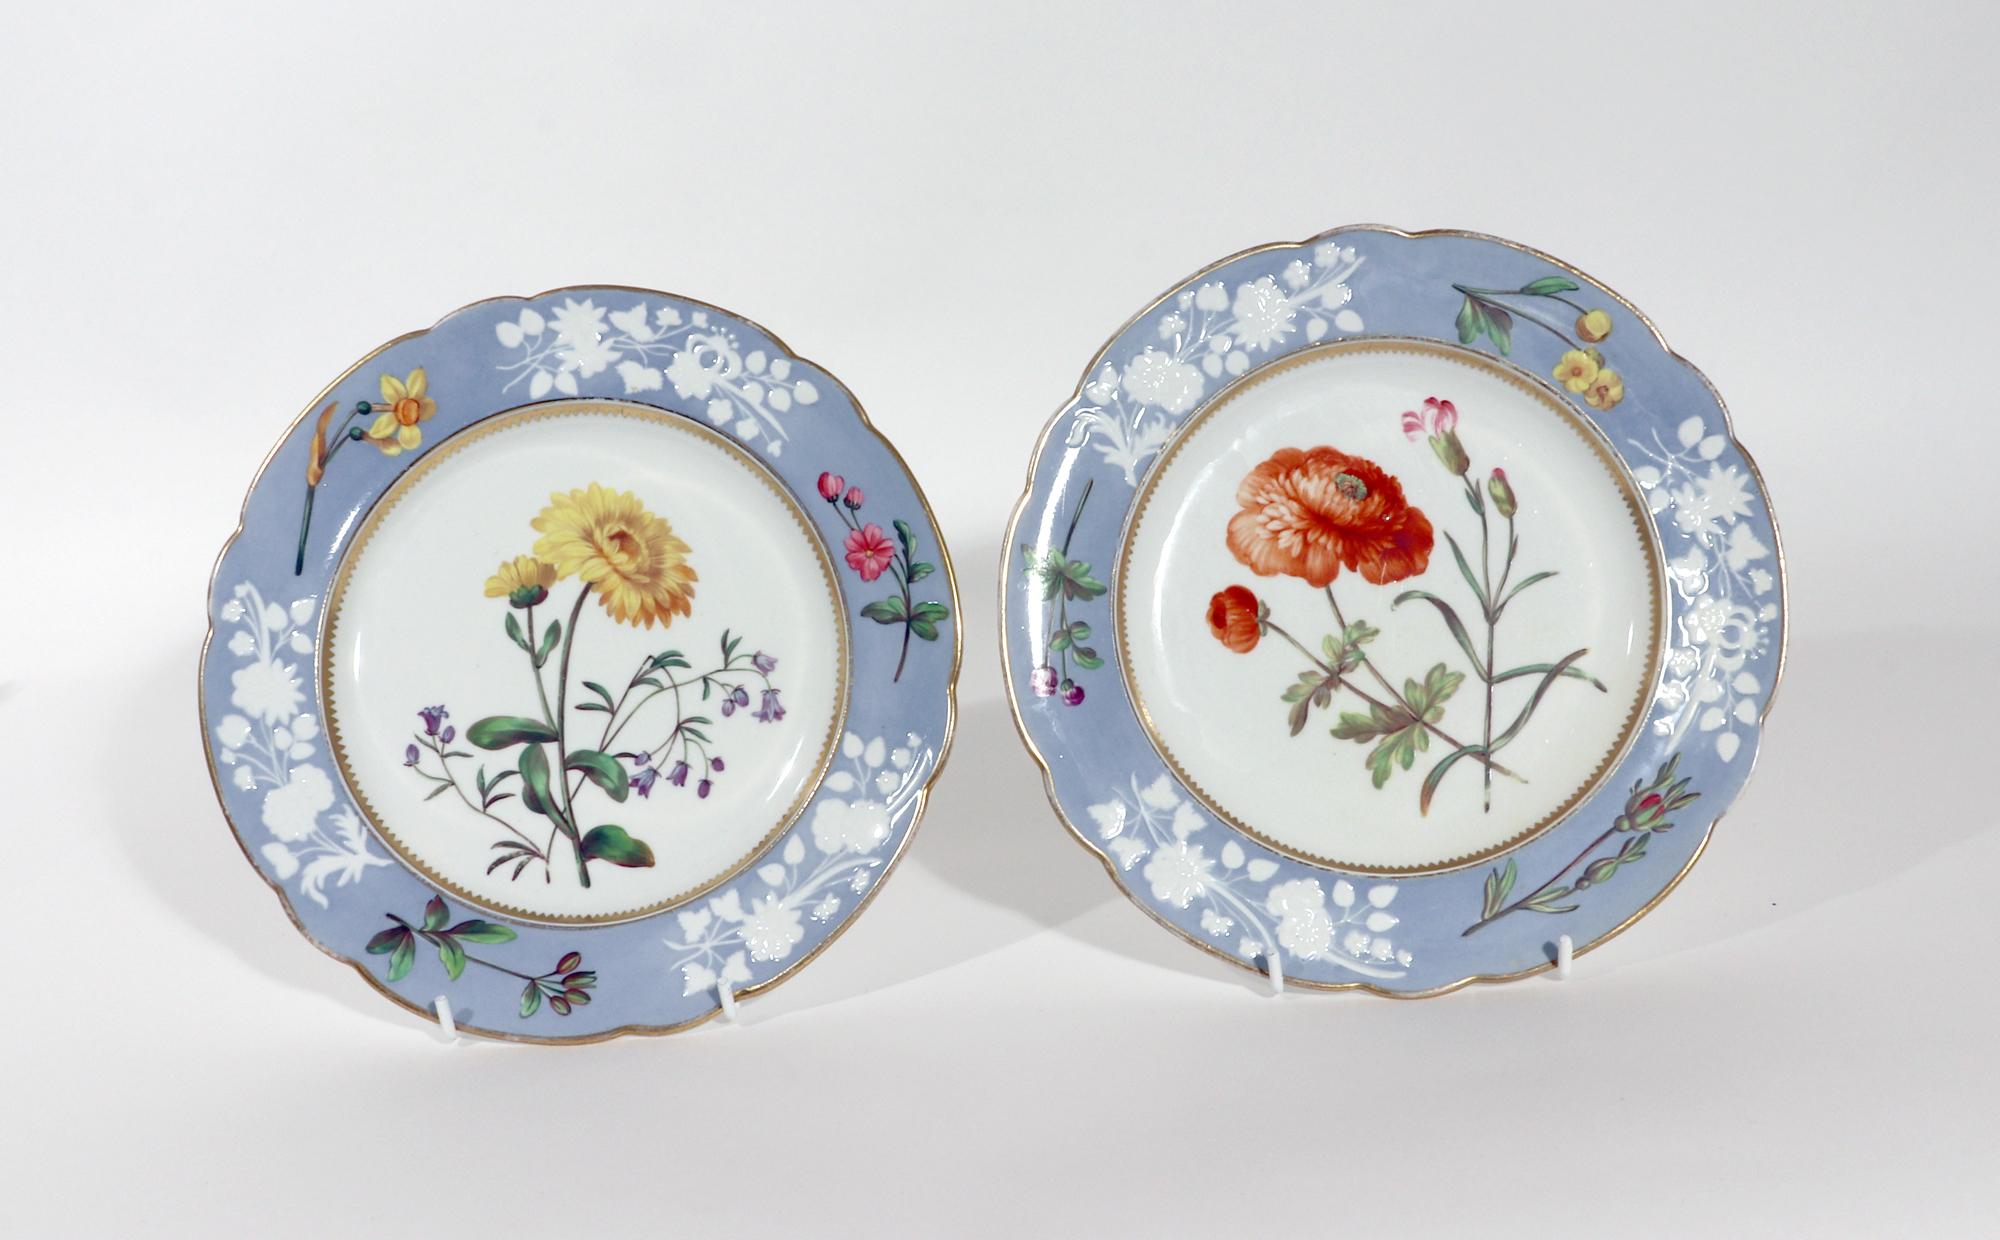 19th Century Regency Spode Porcelain Seventeen Piece Dessert Service, Pattern # 2329